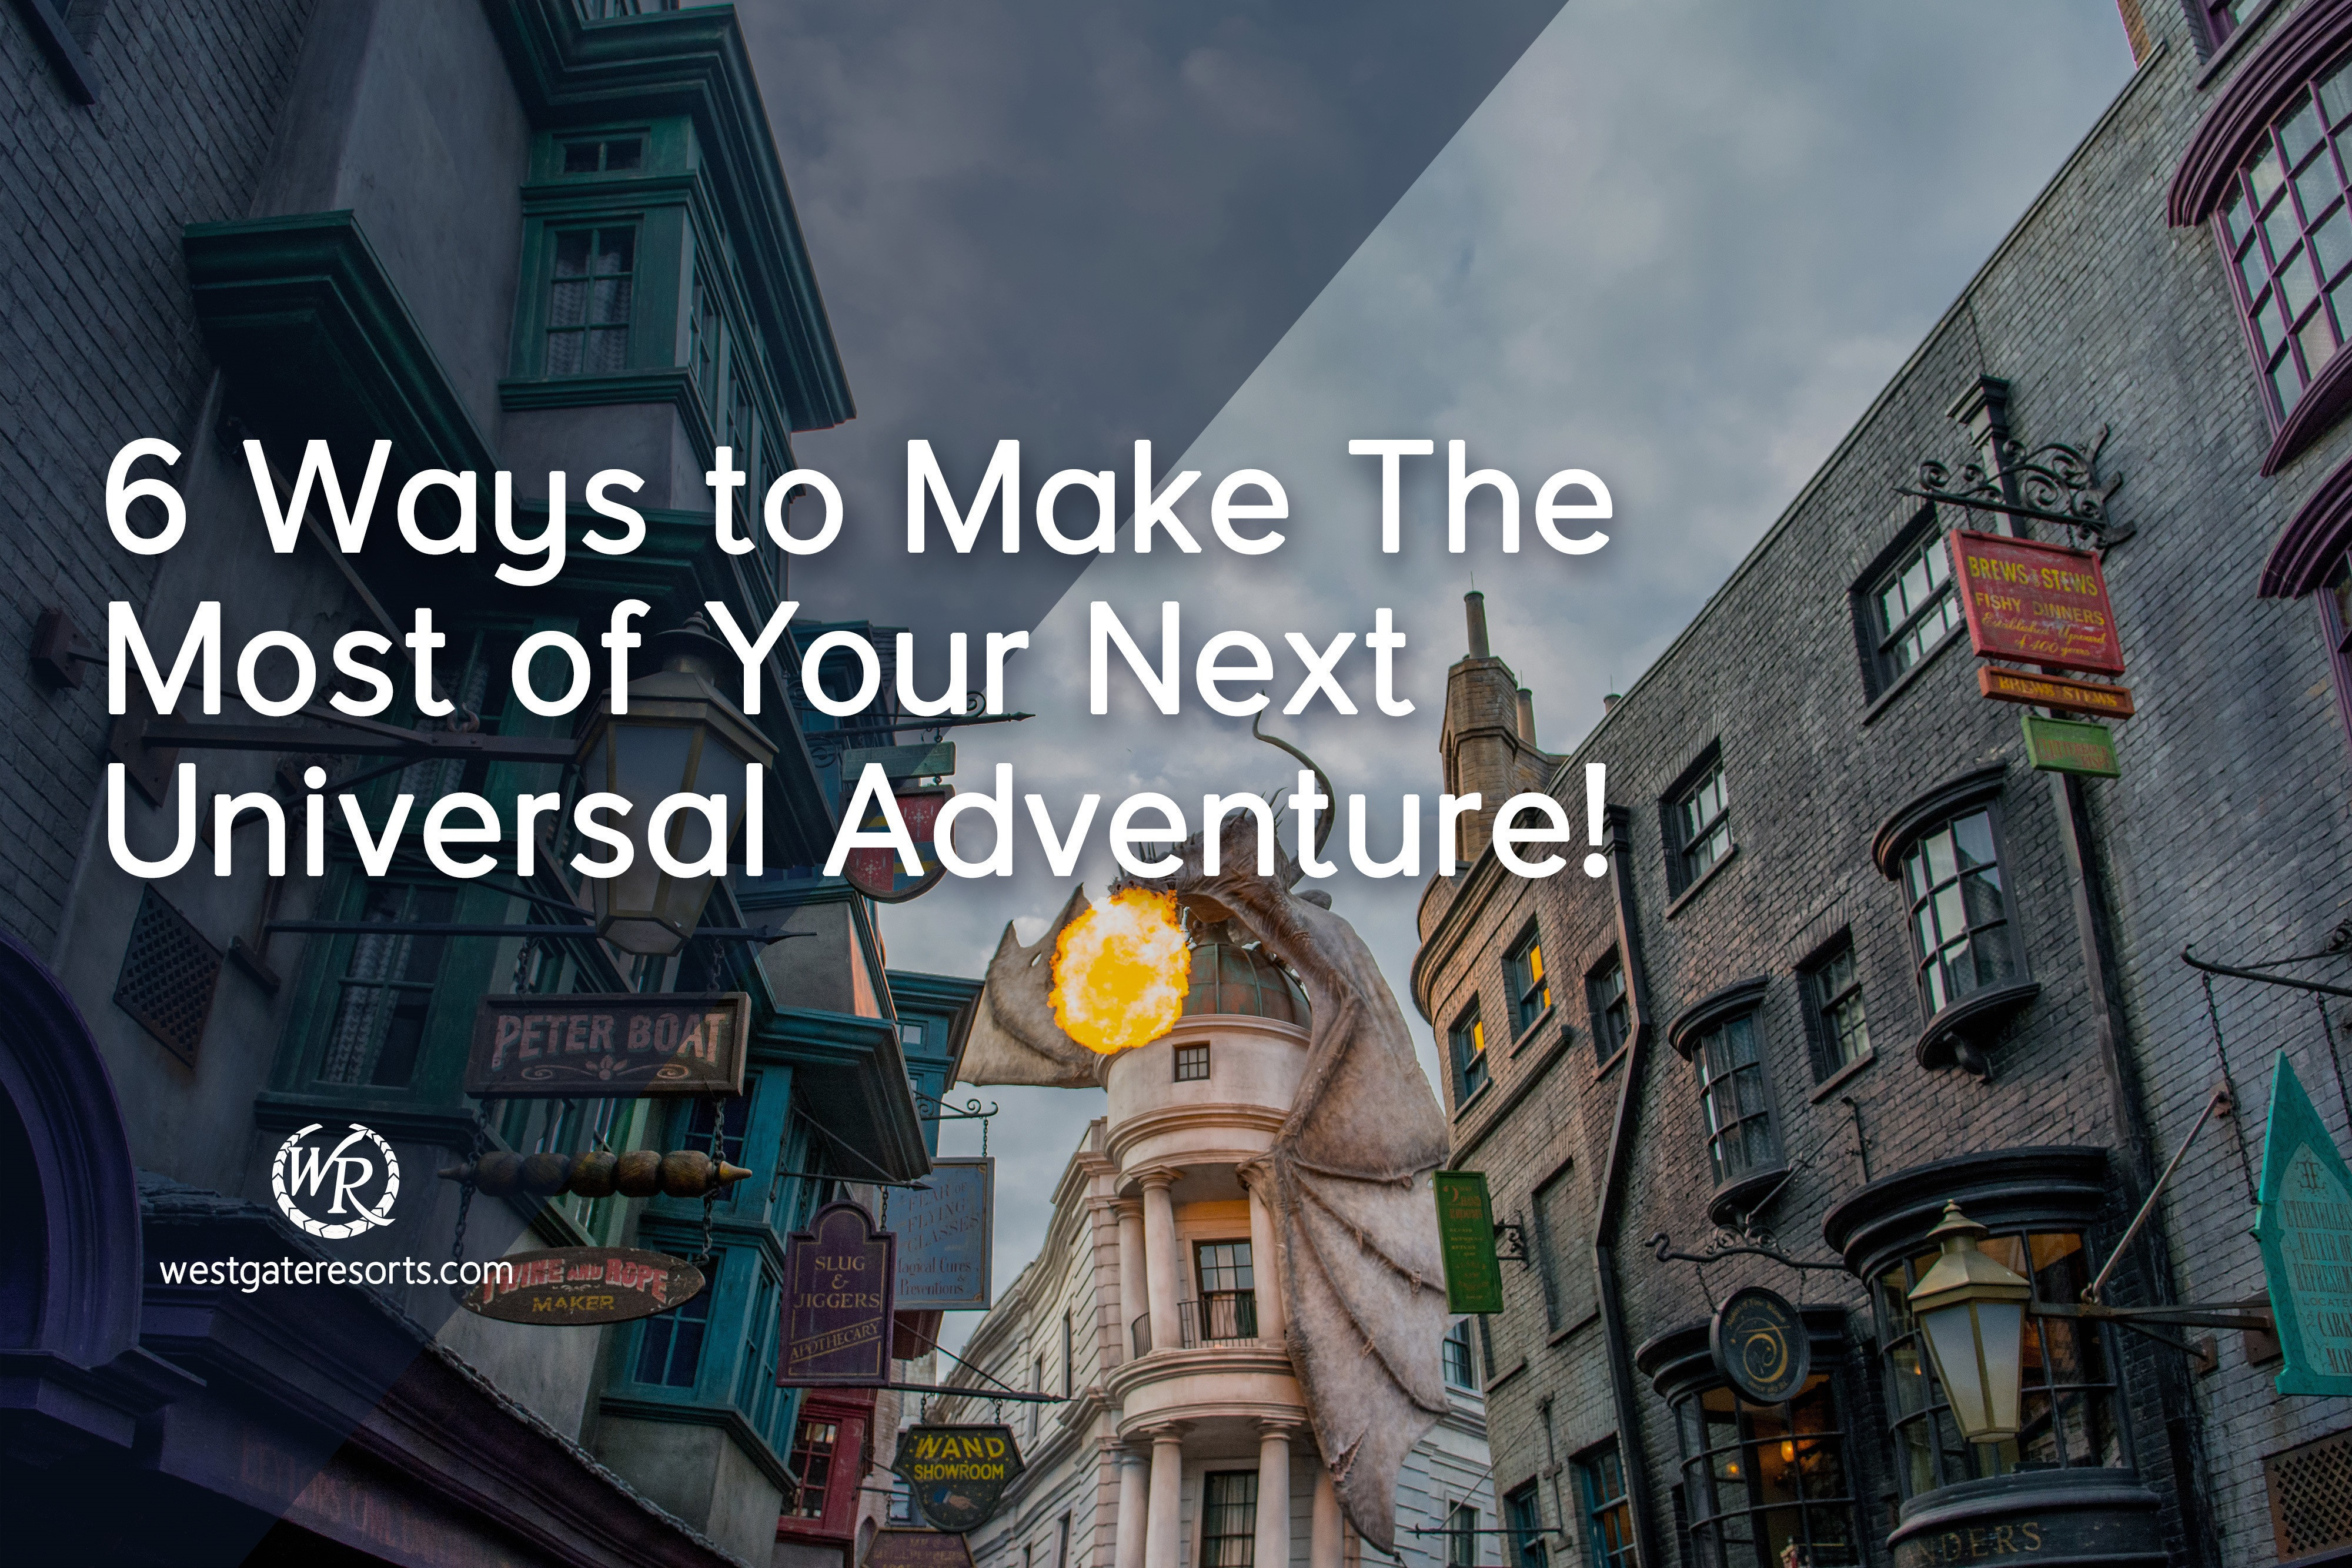 ¡6 maneras de aprovechar al máximo tu próxima aventura universal!